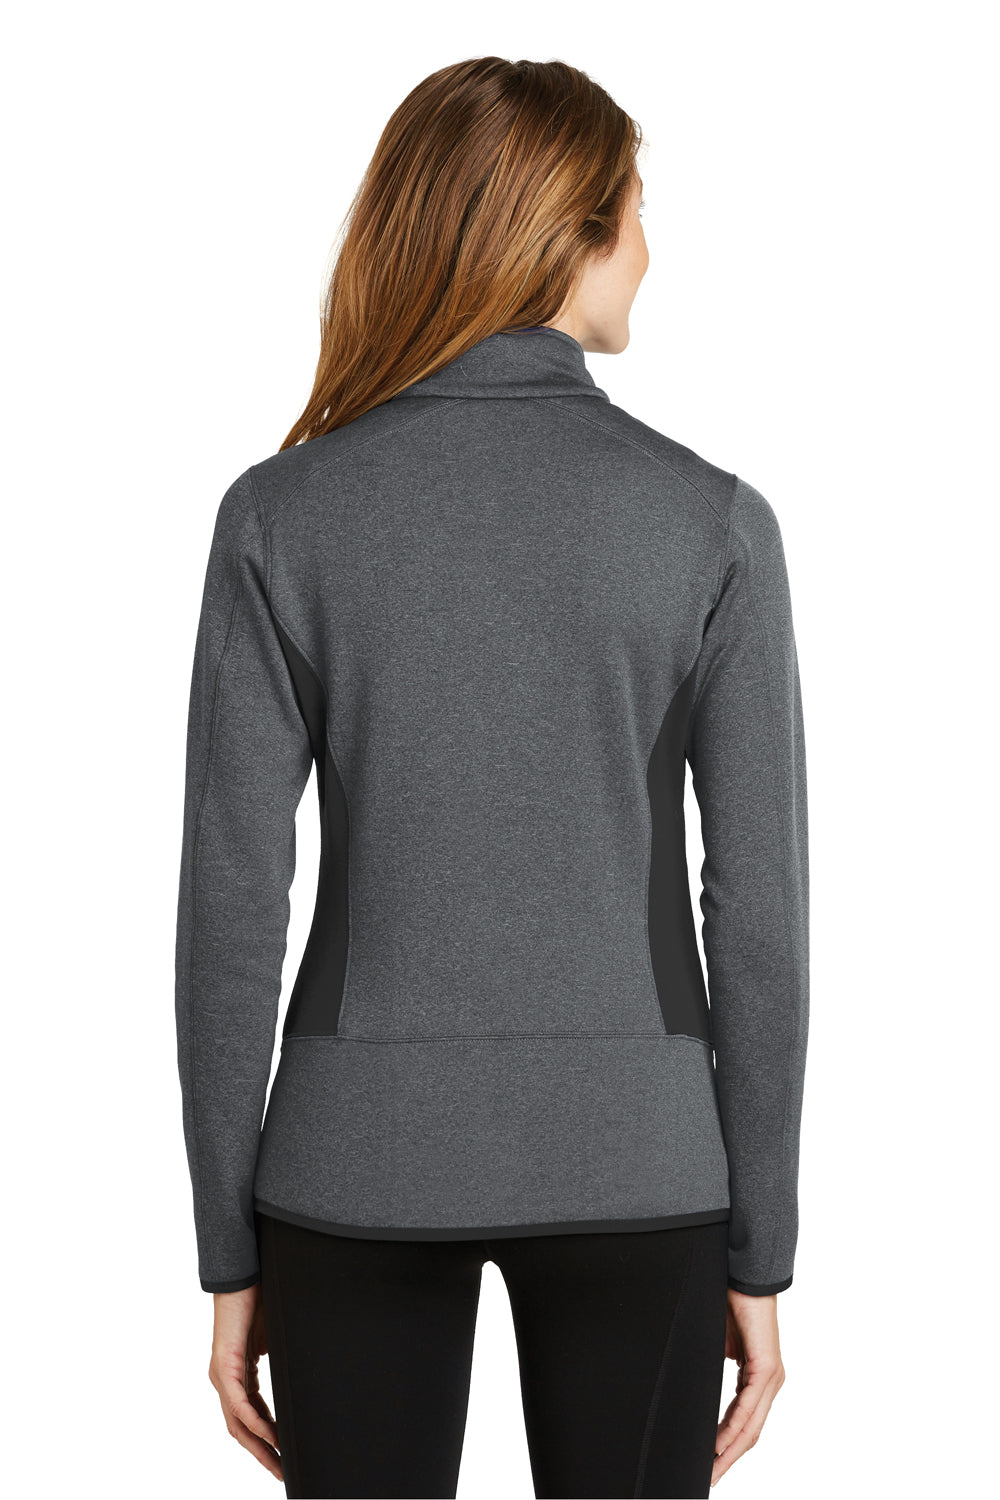 Eddie Bauer EB239 Womens Full Zip Fleece Jacket Heather Dark Charcoal Grey Model Back